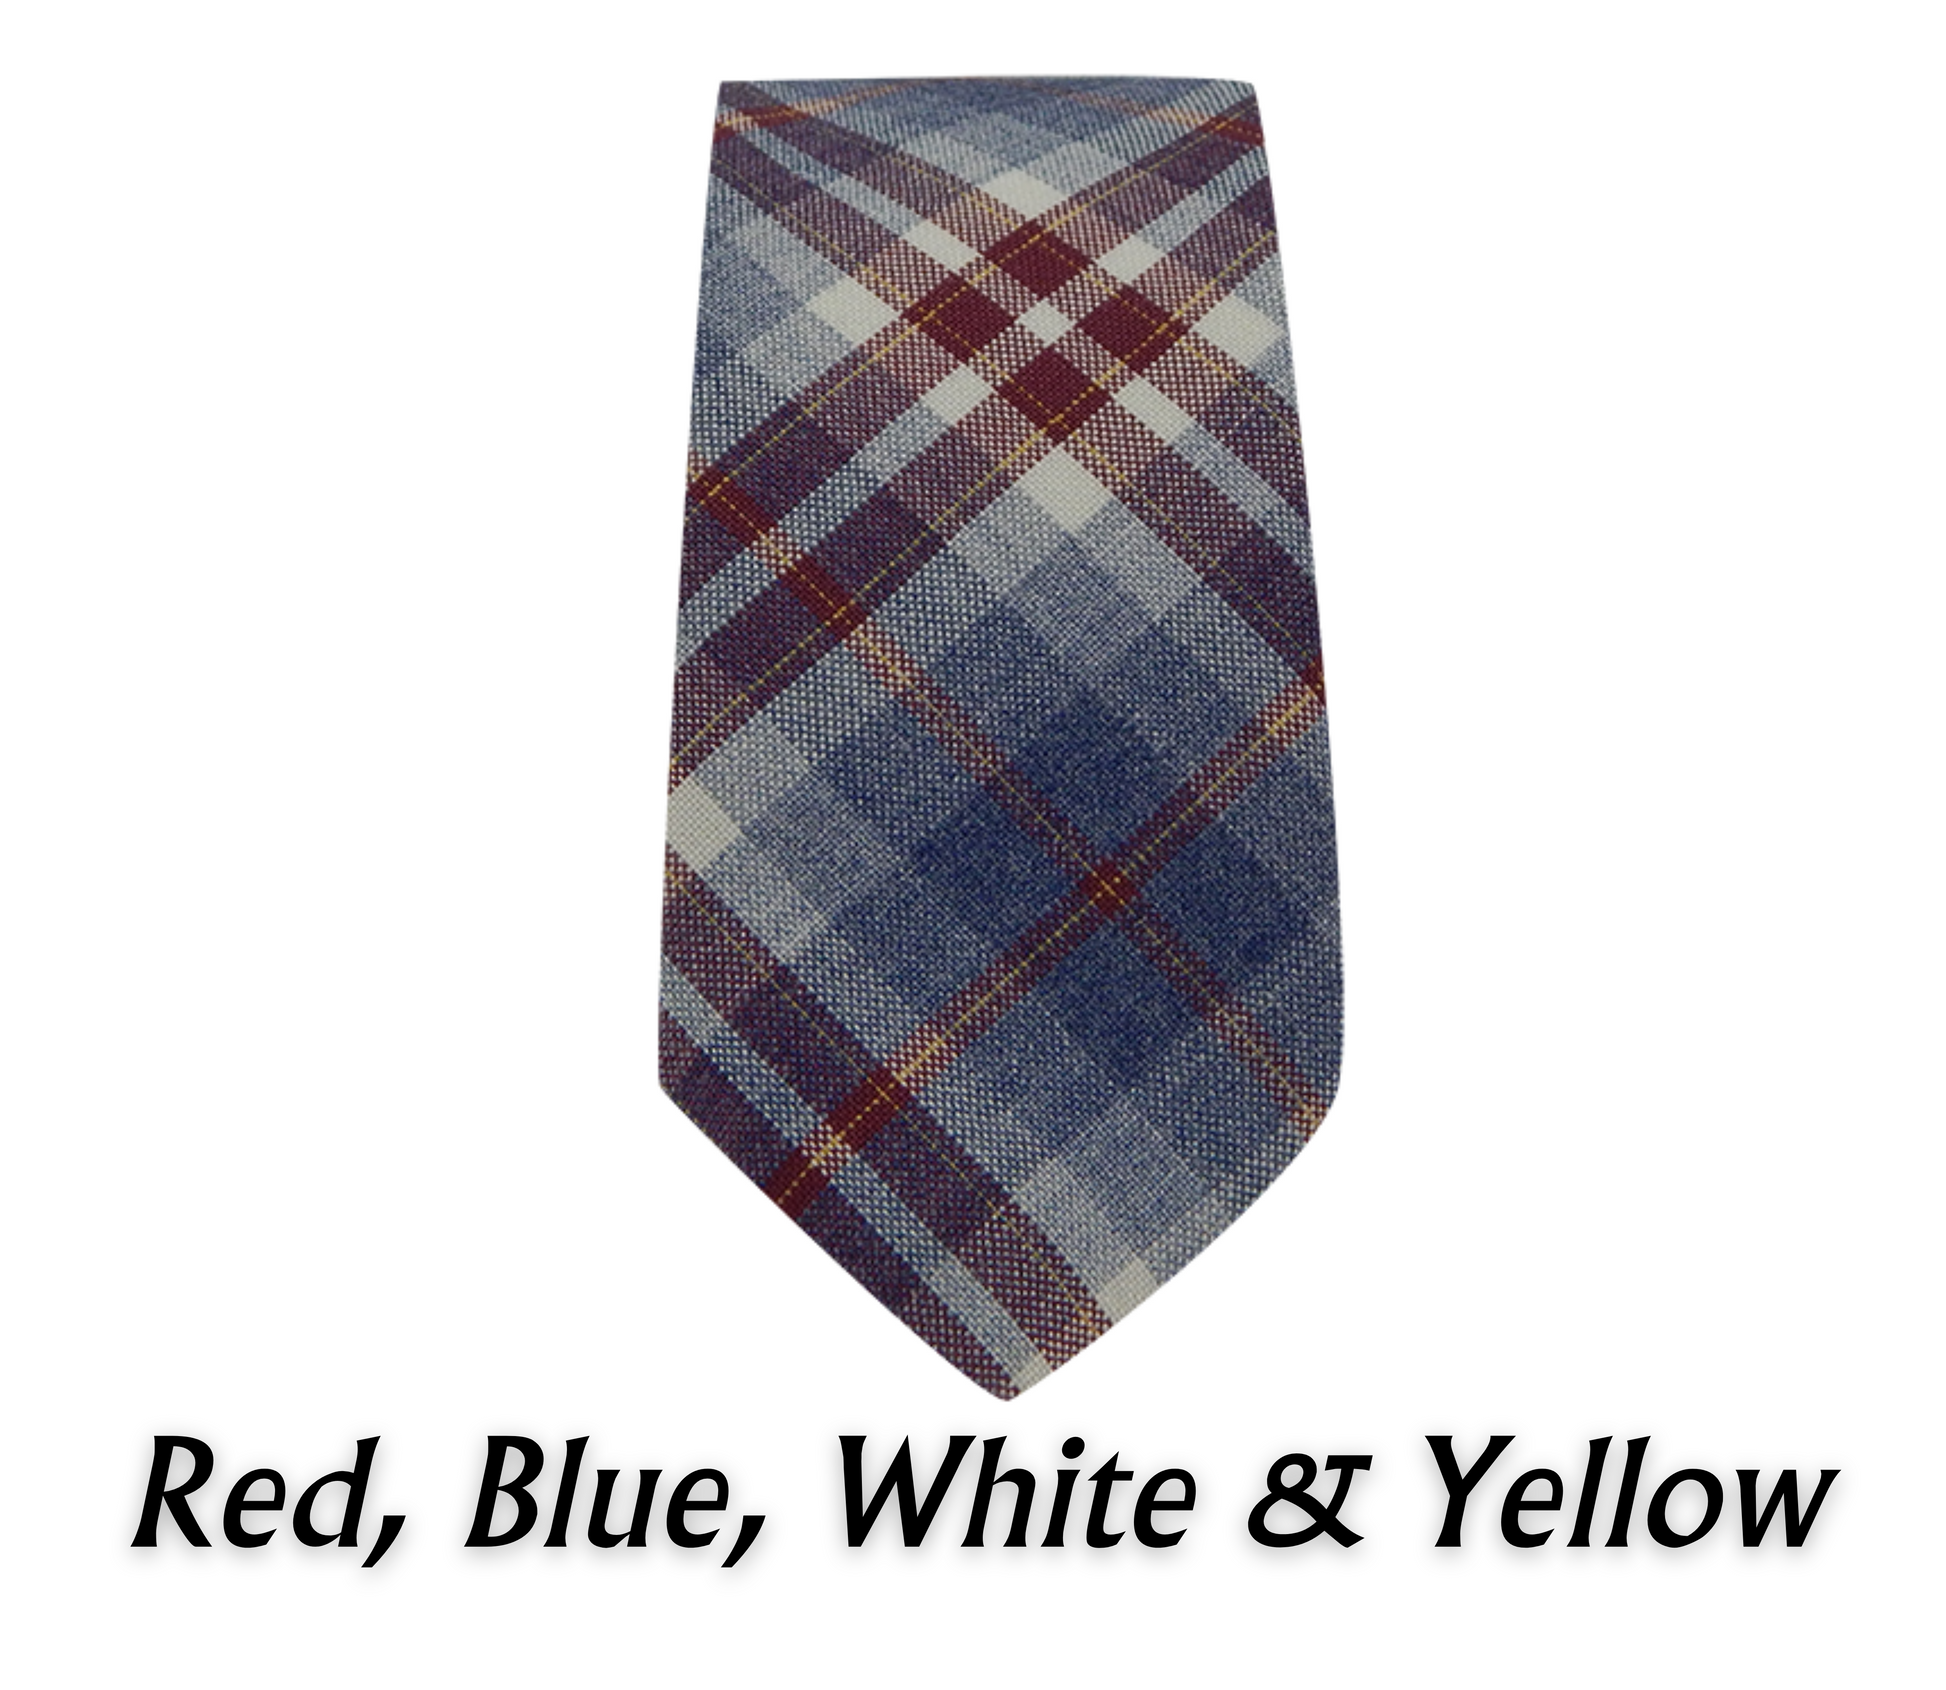 Relhok Plaid Necktie - Blue Red White & Yellow - 8_84ea8b2e-7c14-4595-8bee-ac037edf67fb